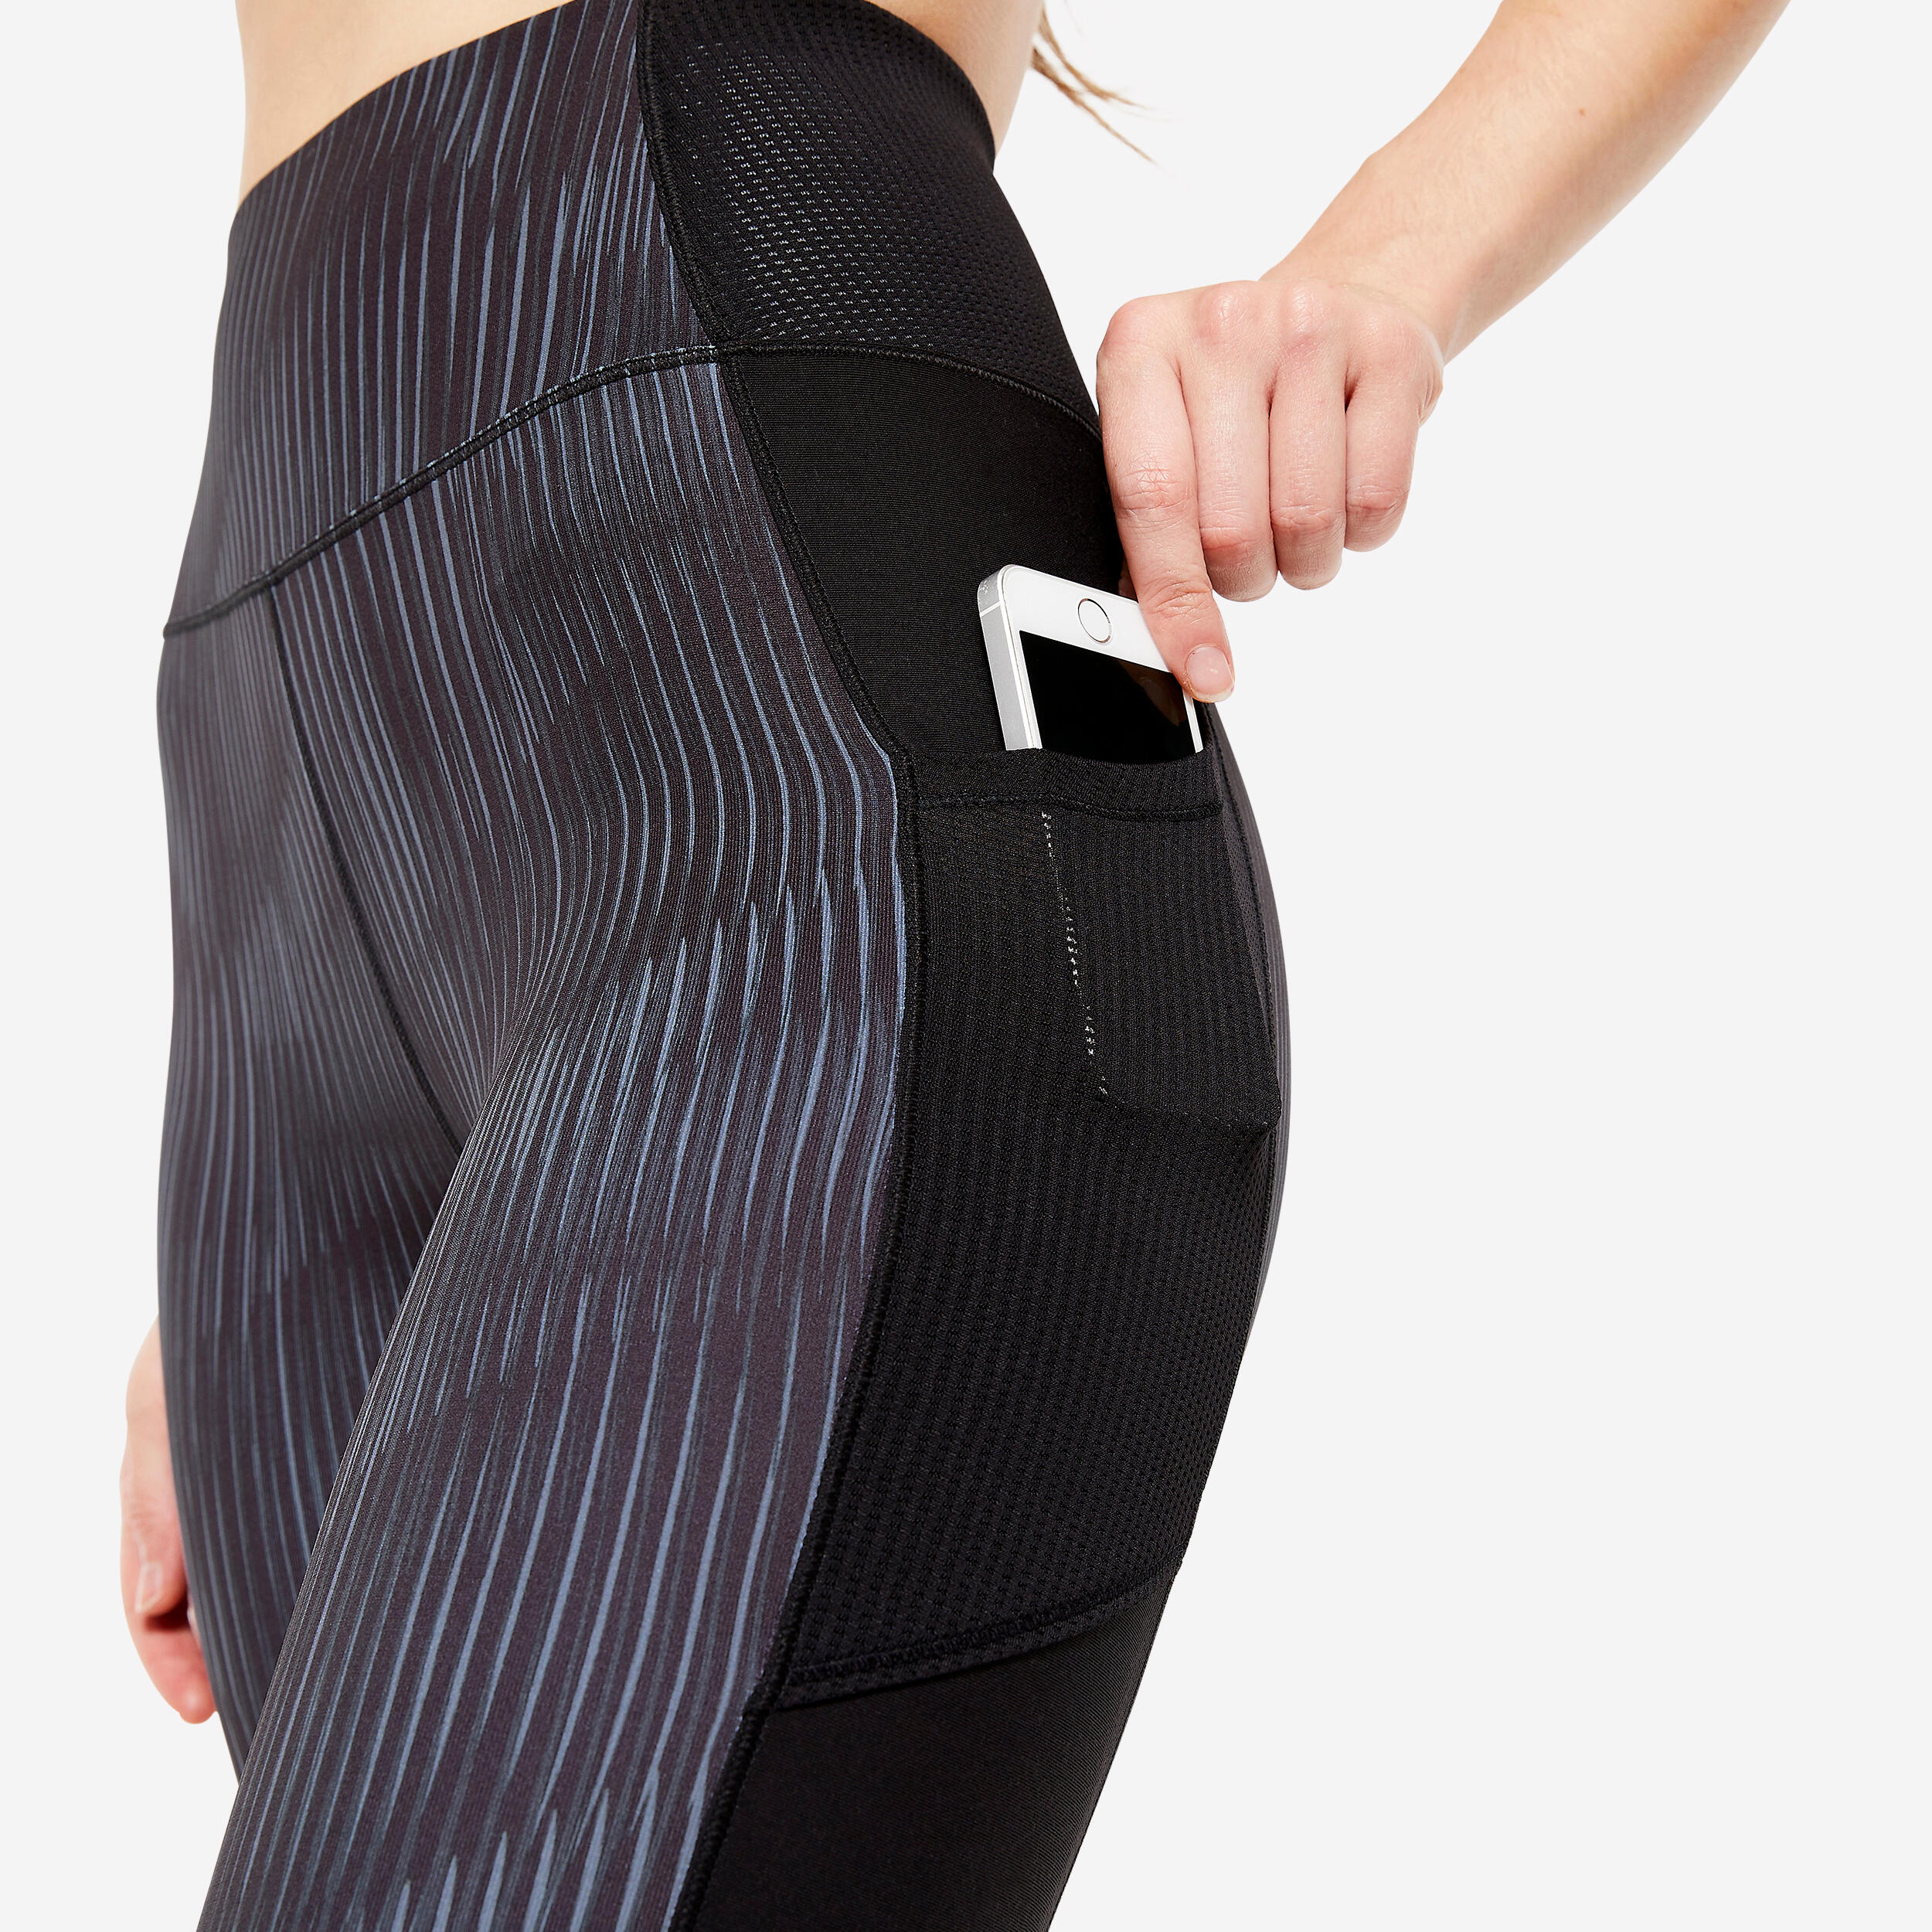 Women's Fitness Cardio Leggings with Phone Pocket - Black/Grey Print 4/7